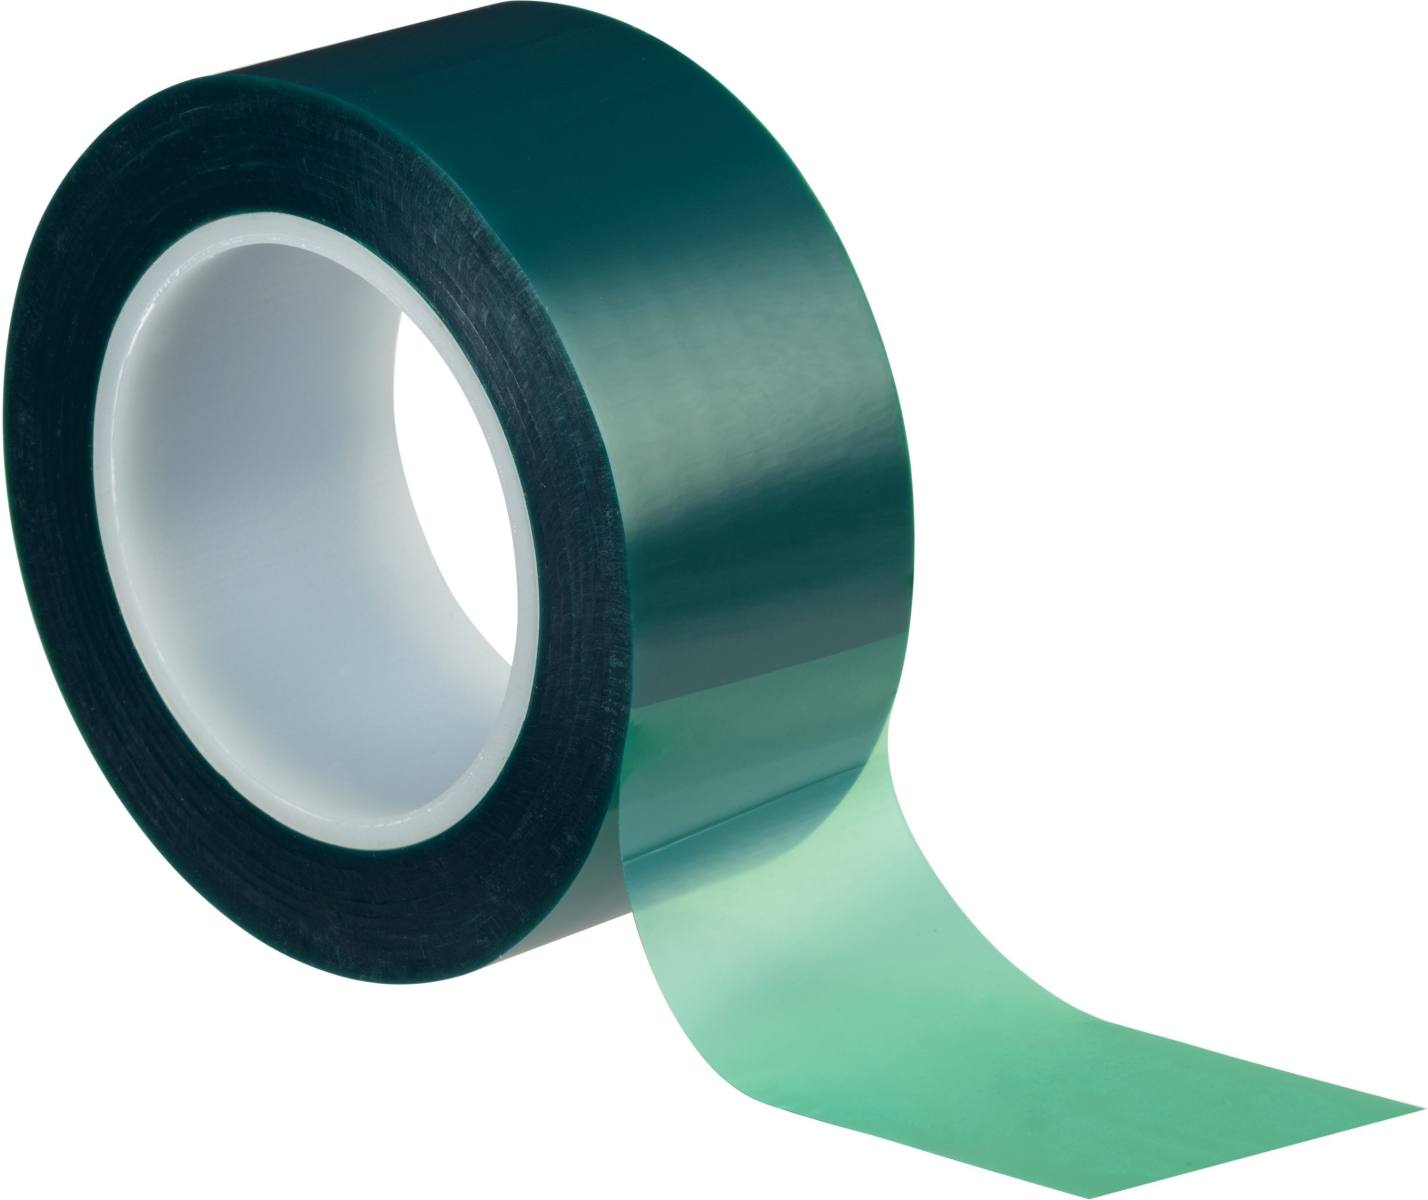 3M polyester masking tape 8992, green, 100 mm x 66 m